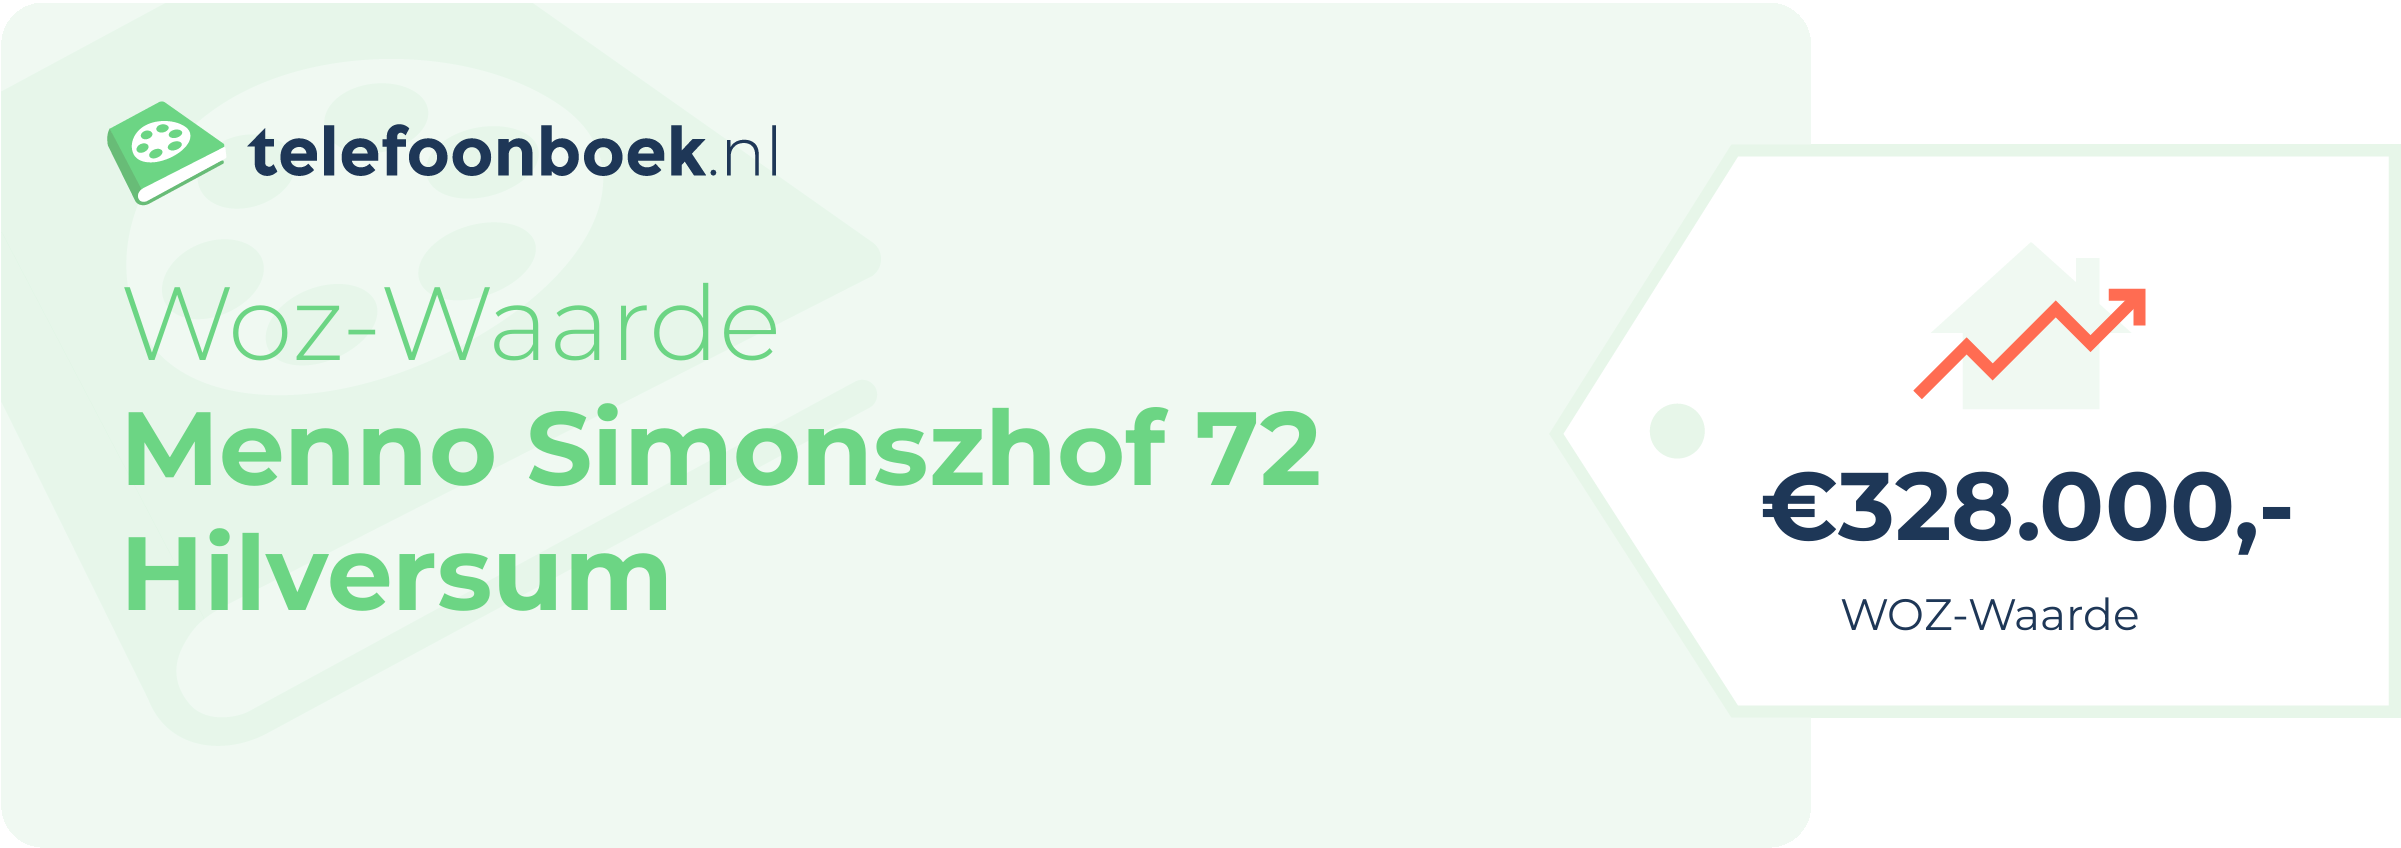 WOZ-waarde Menno Simonszhof 72 Hilversum